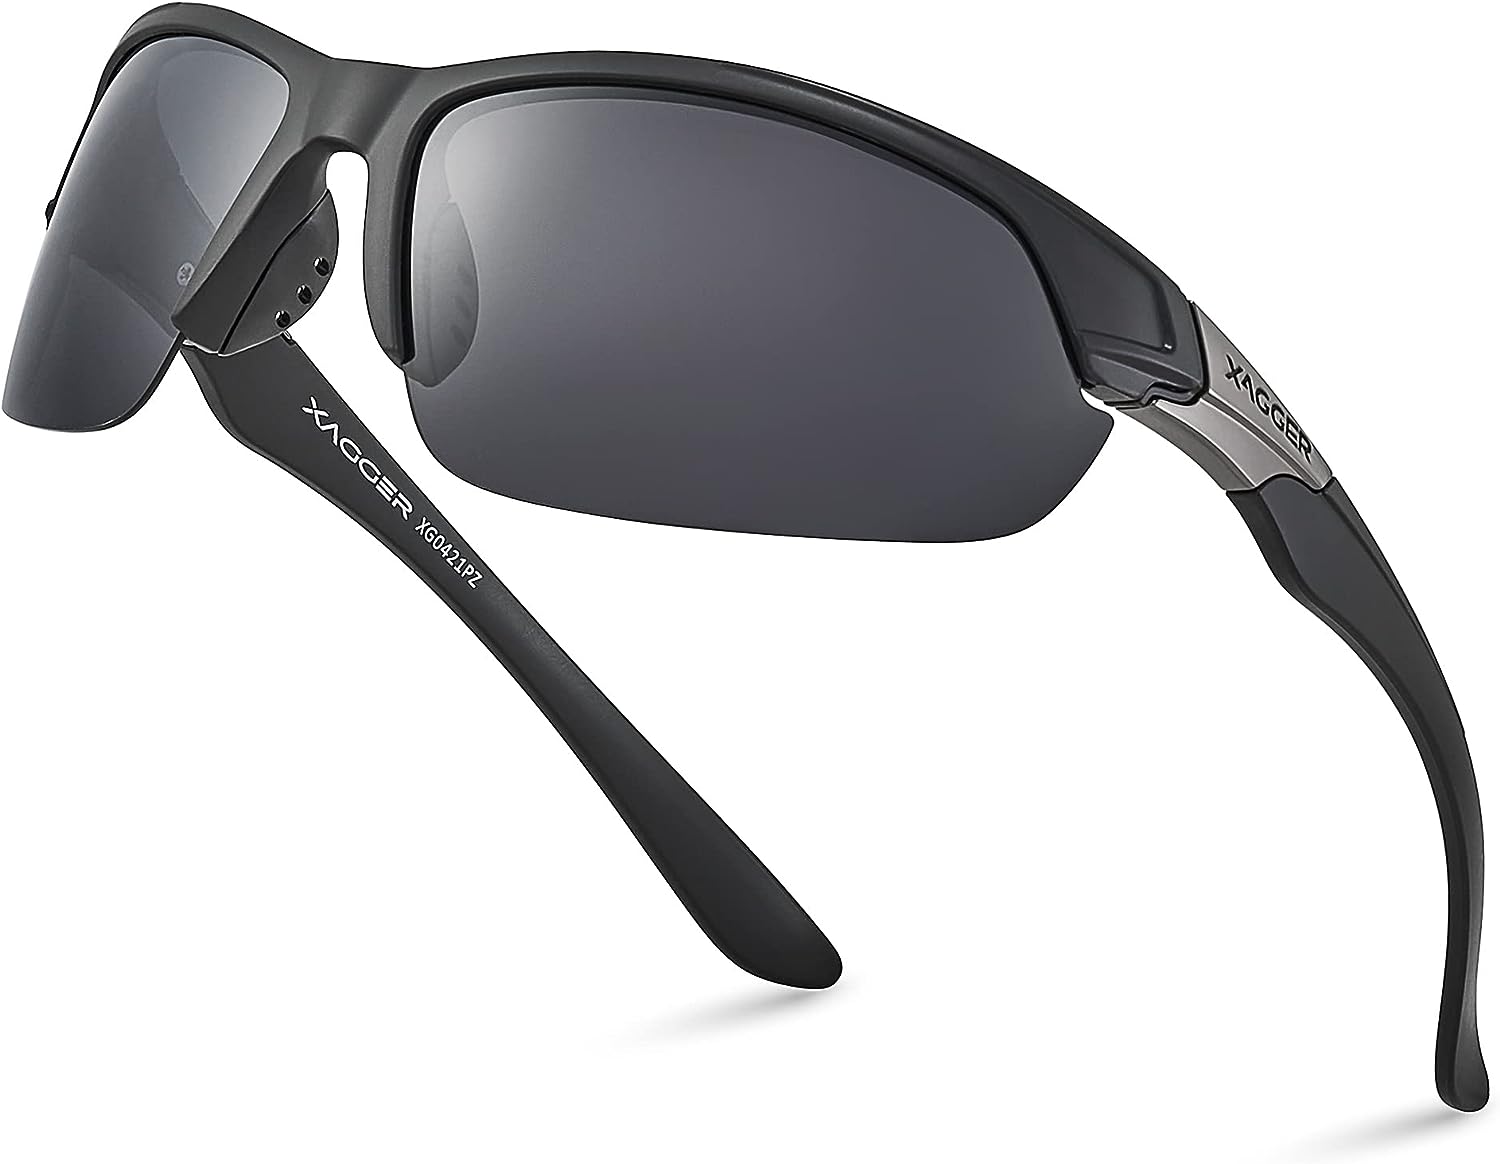  Xagger Polarized Sports Sunglasses for Men Women